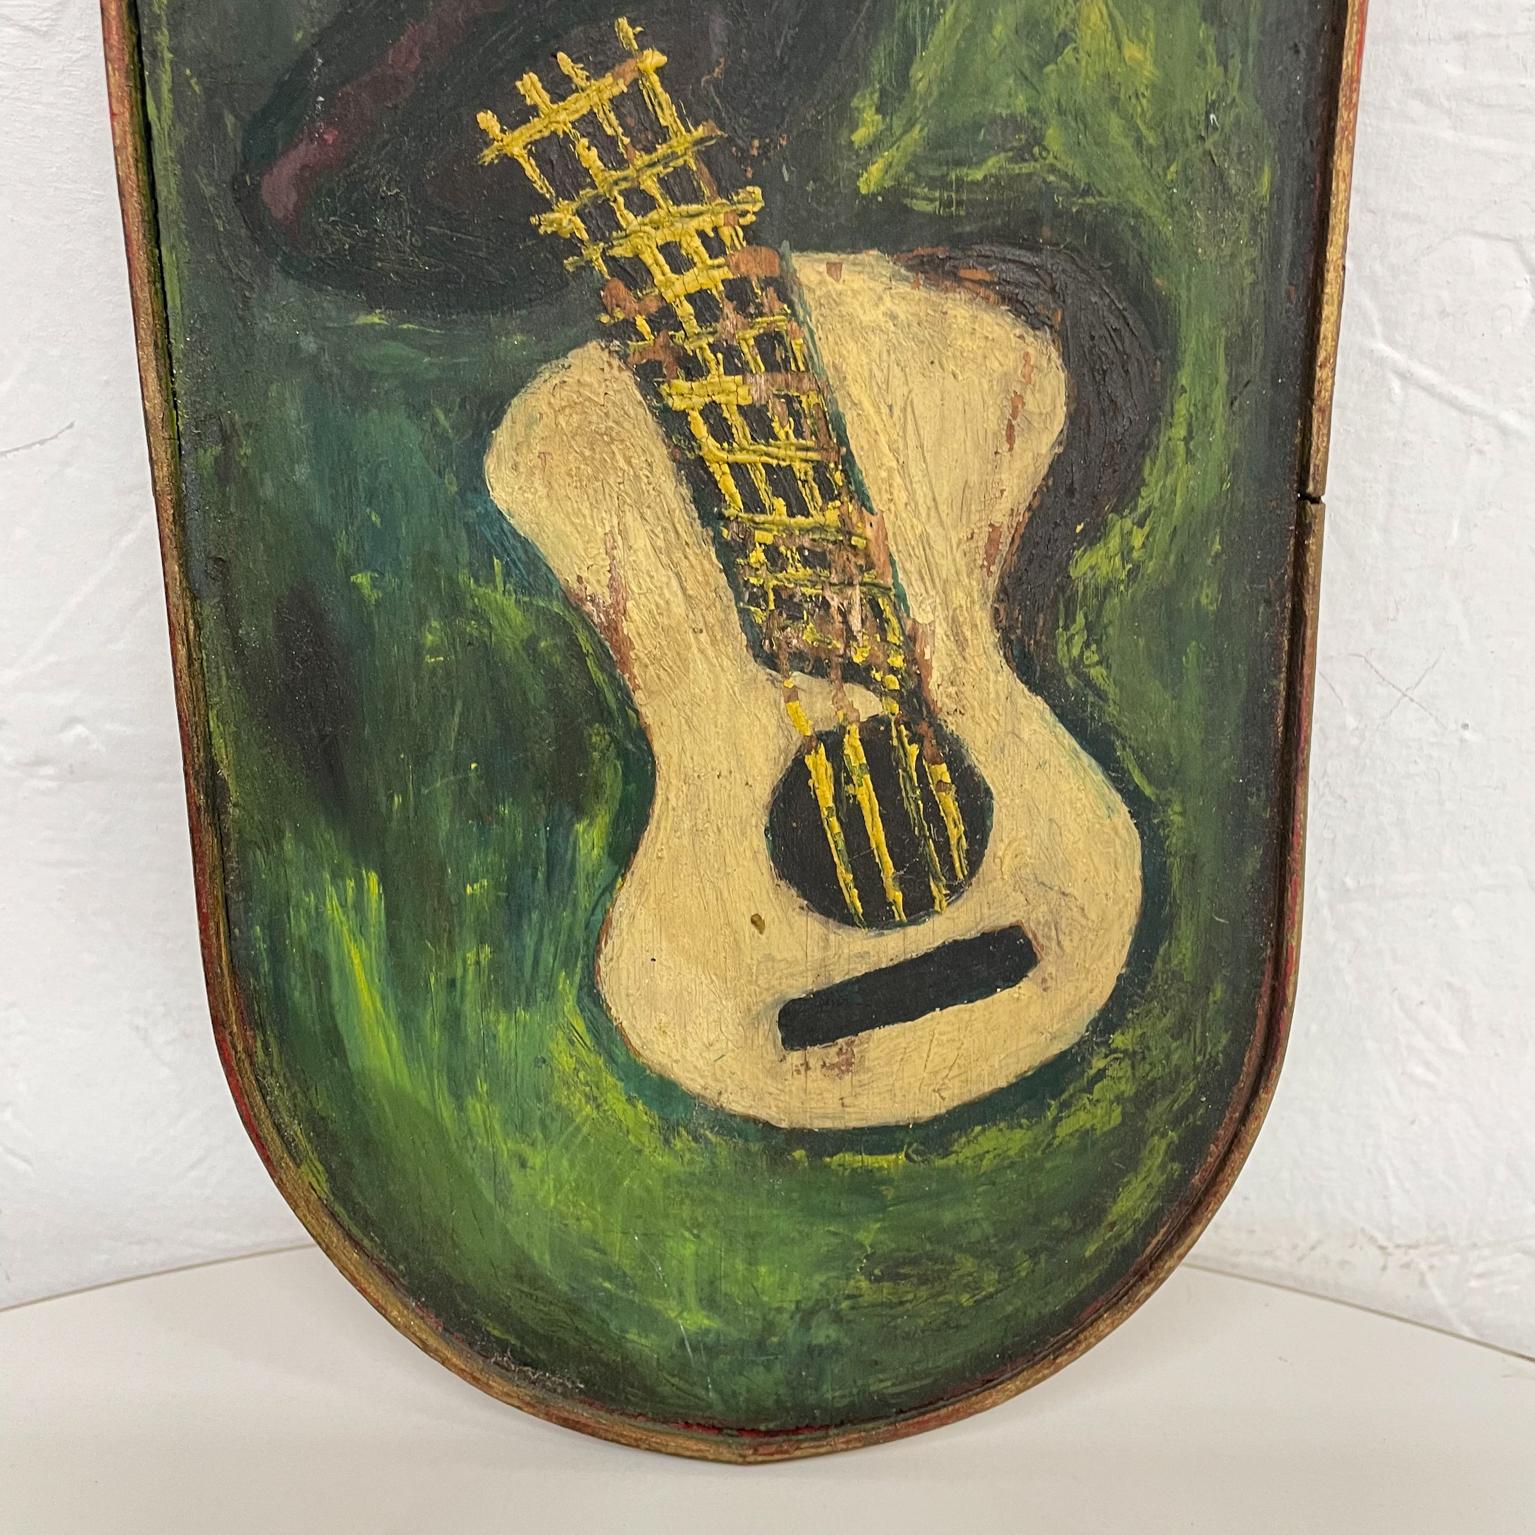 North American Green Guitar Folk Art Painted Wood Plaque Vintage Wall Art 1970s